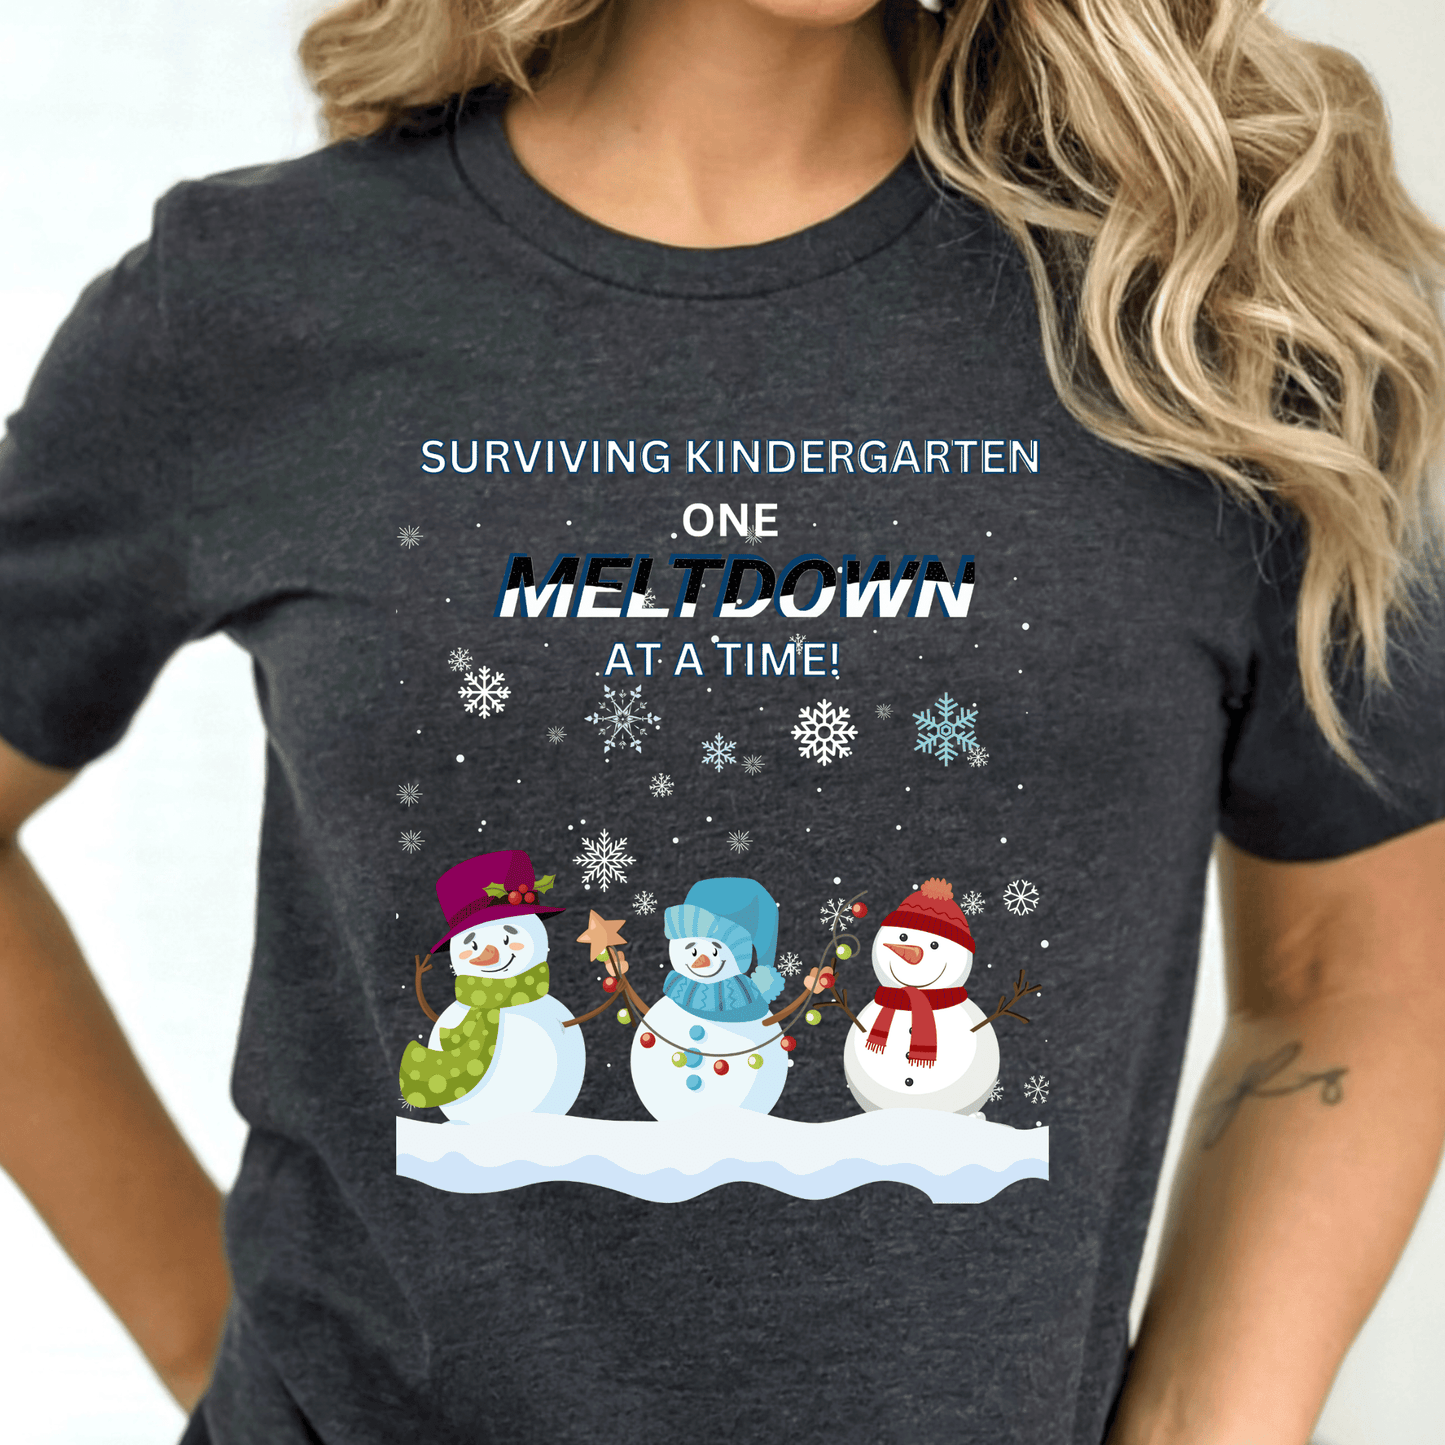 Surviving Kindergarten t-shirt